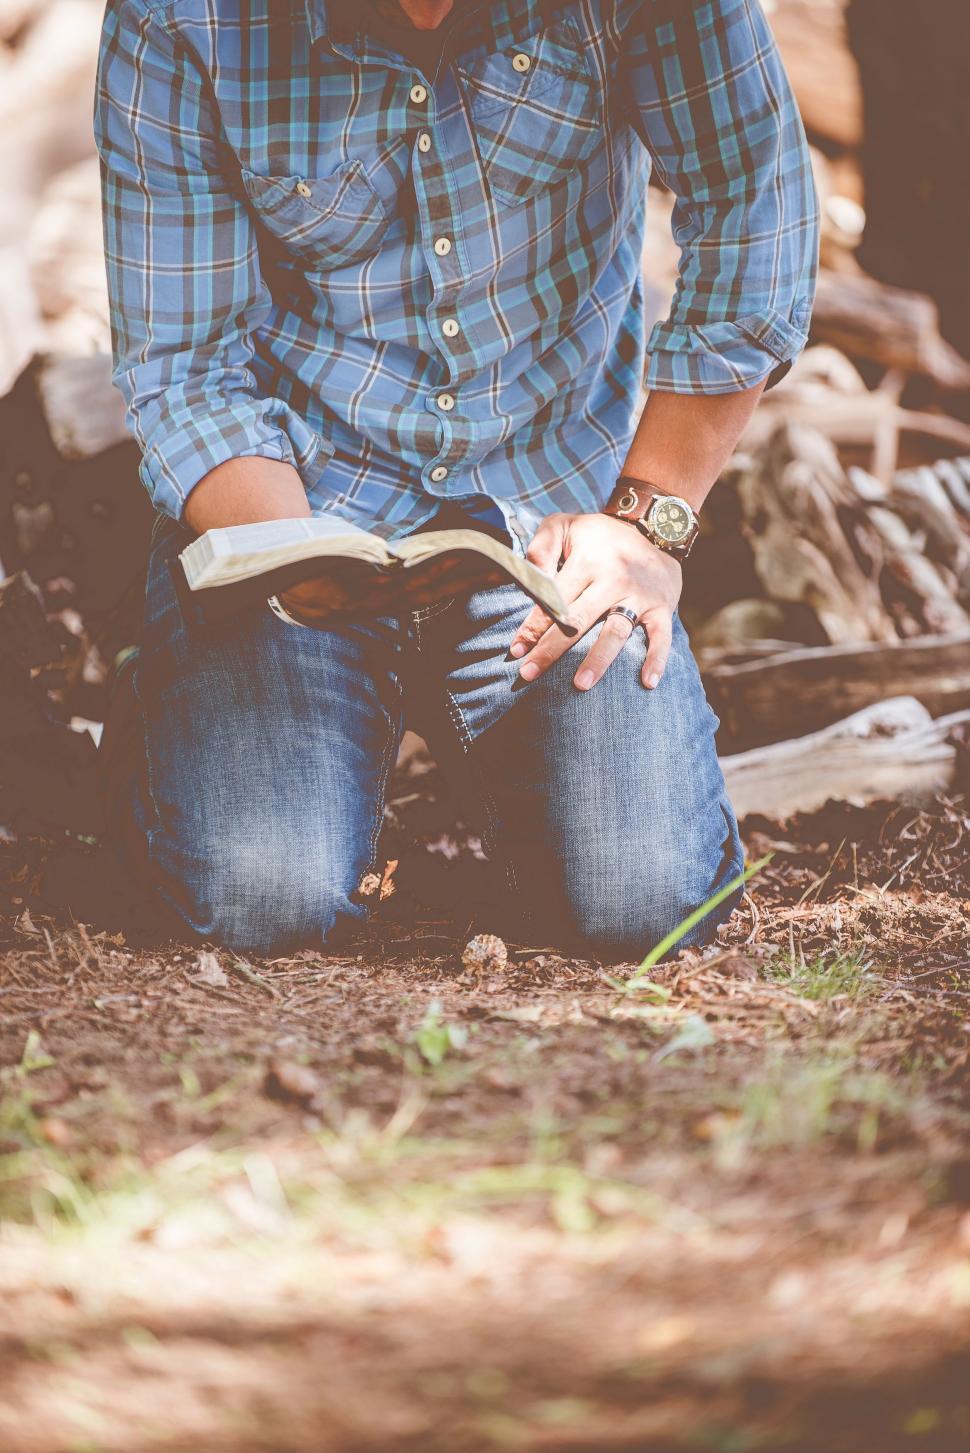 Free Image of Man Sitting on Ground Reading Book 